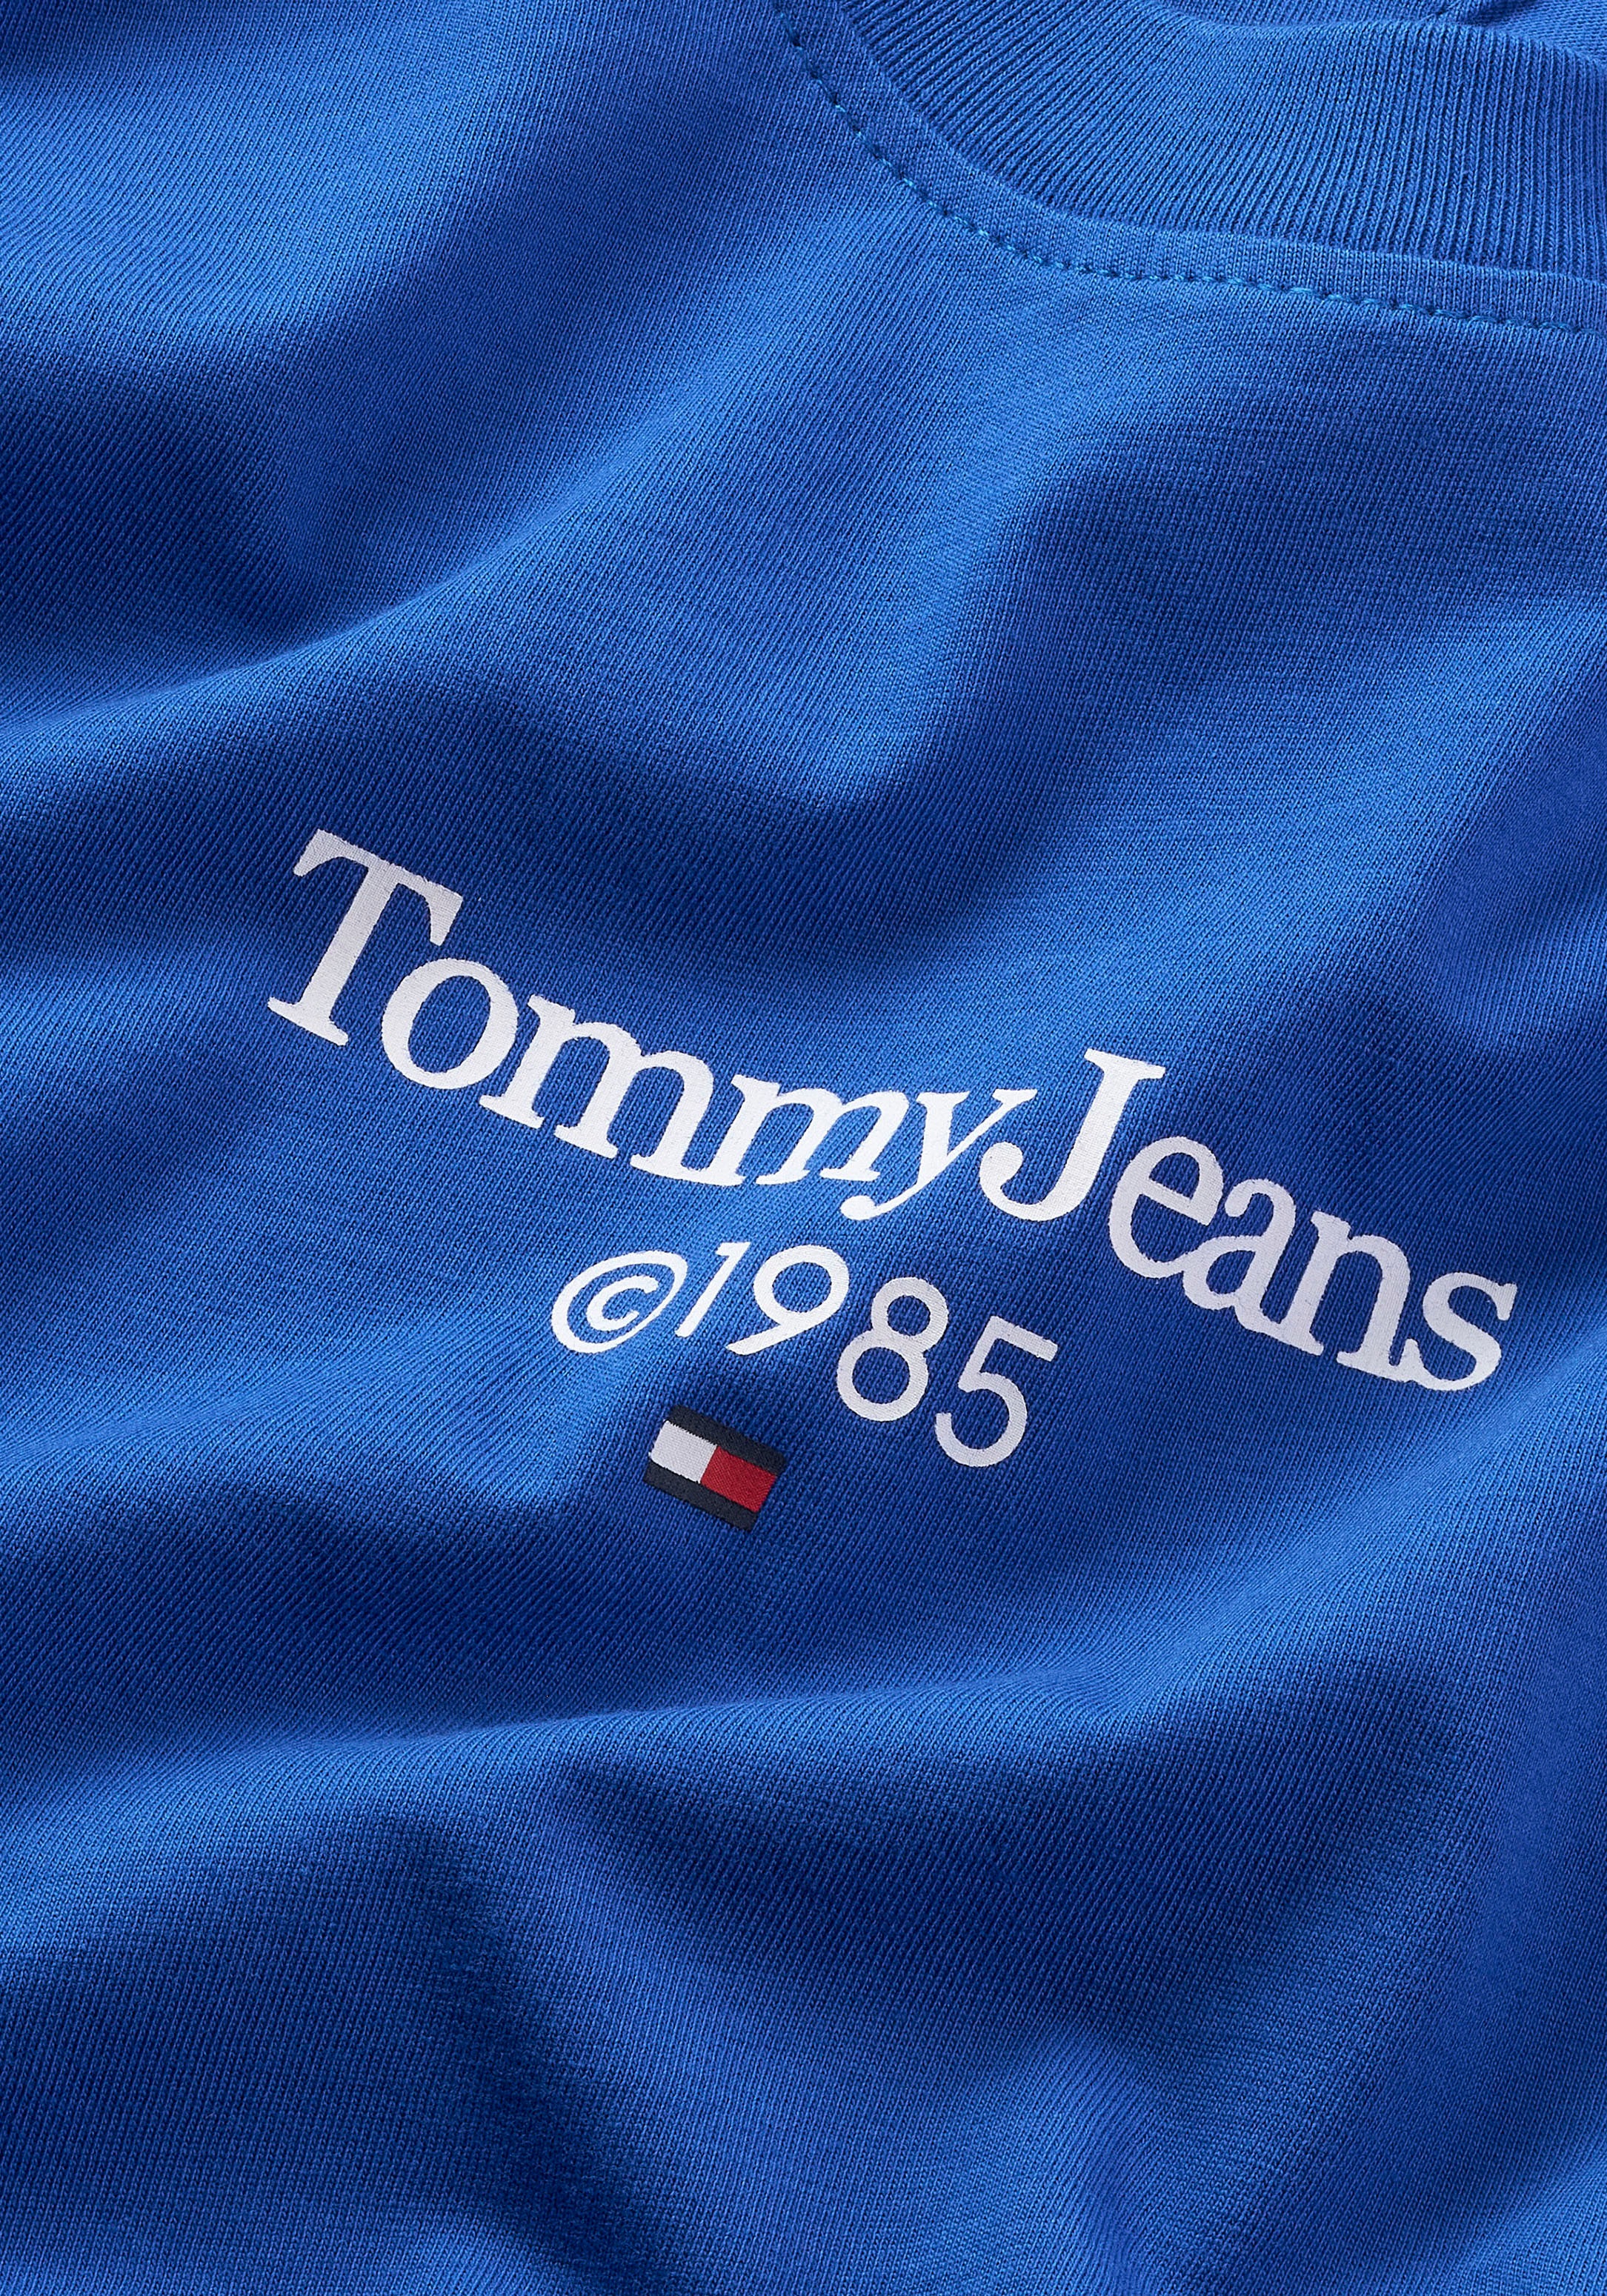 Tommy Jeans T-Shirt »TJM SLIM TJ 85 ENTRY TEE EXT«